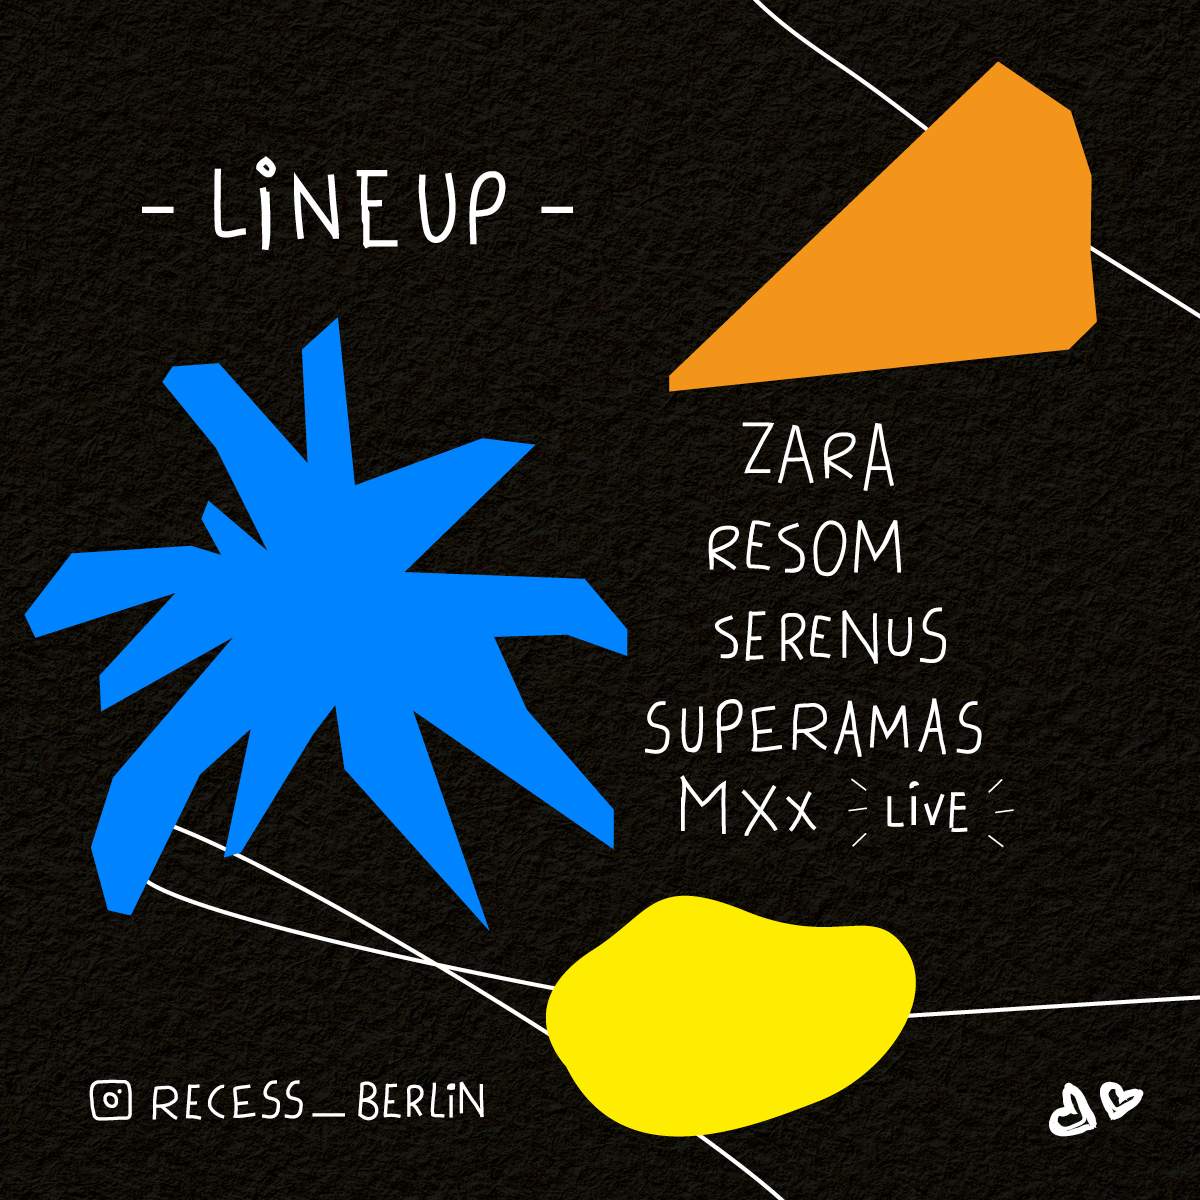 Recess with Zara, Resom, serenus, MXX (live) & superamas - Página trasera